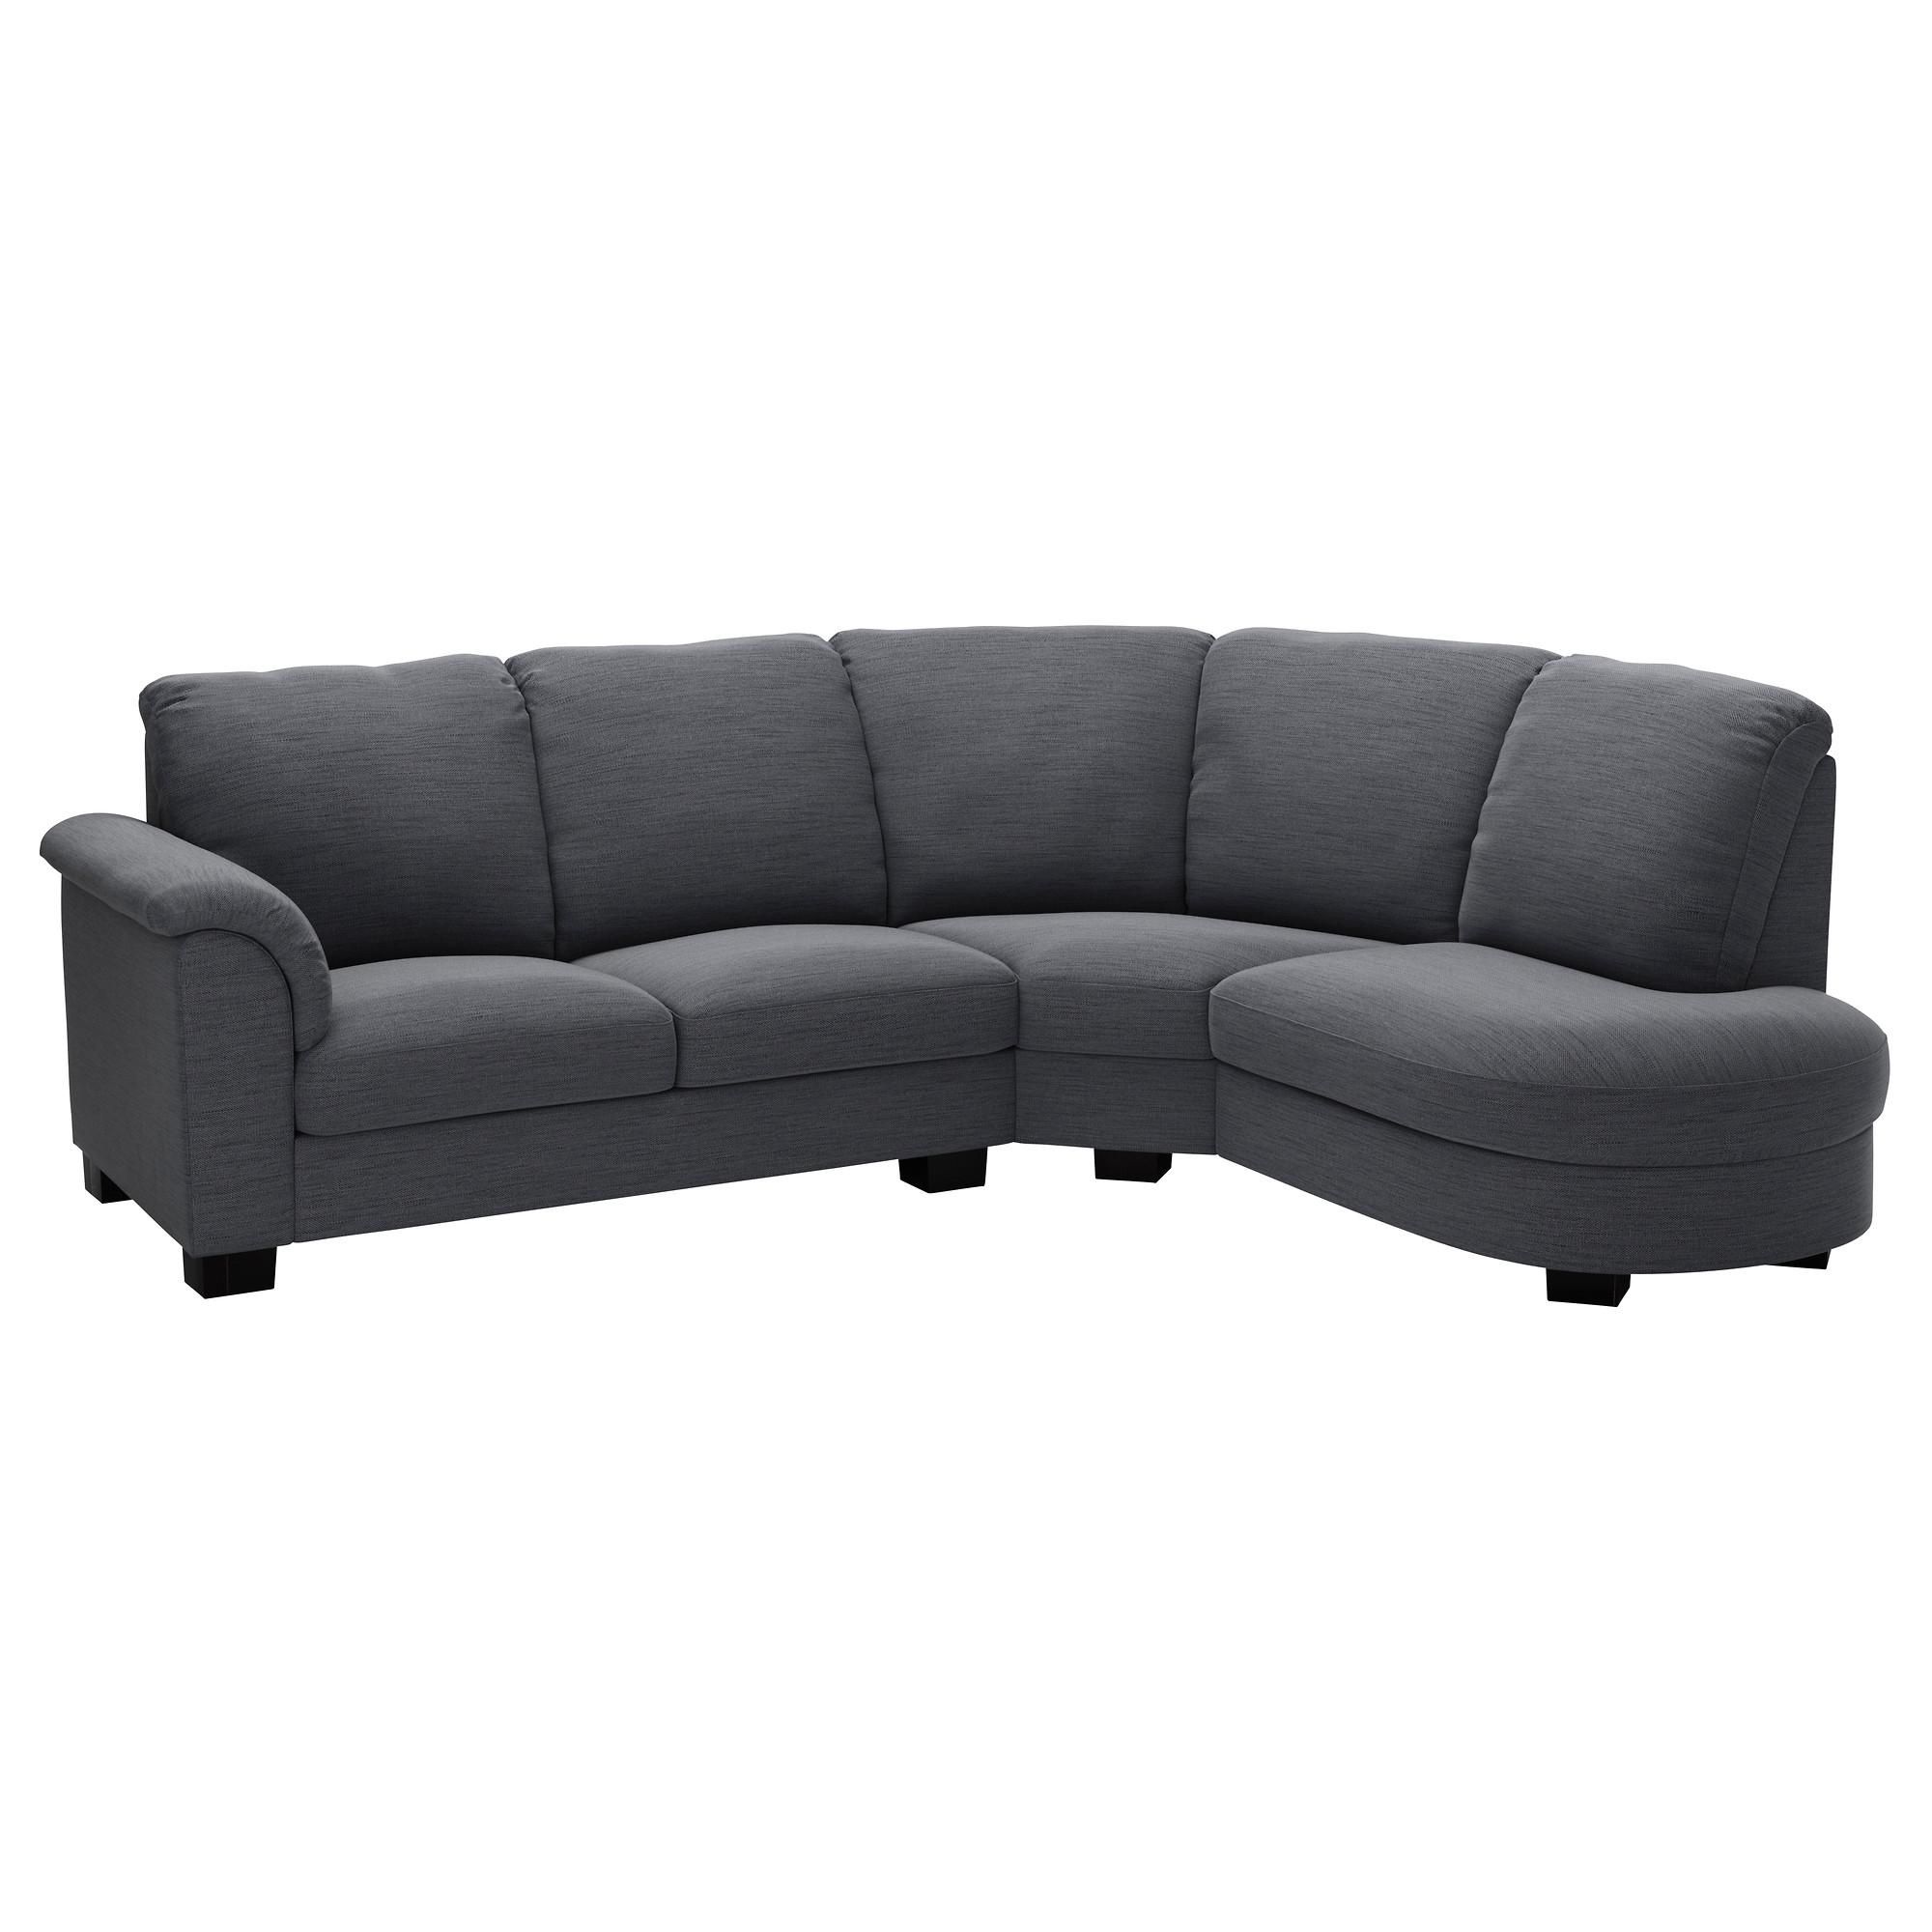 Fabric Corner Sofas | Ikea Inside Sofas With High Backs (View 11 of 20)